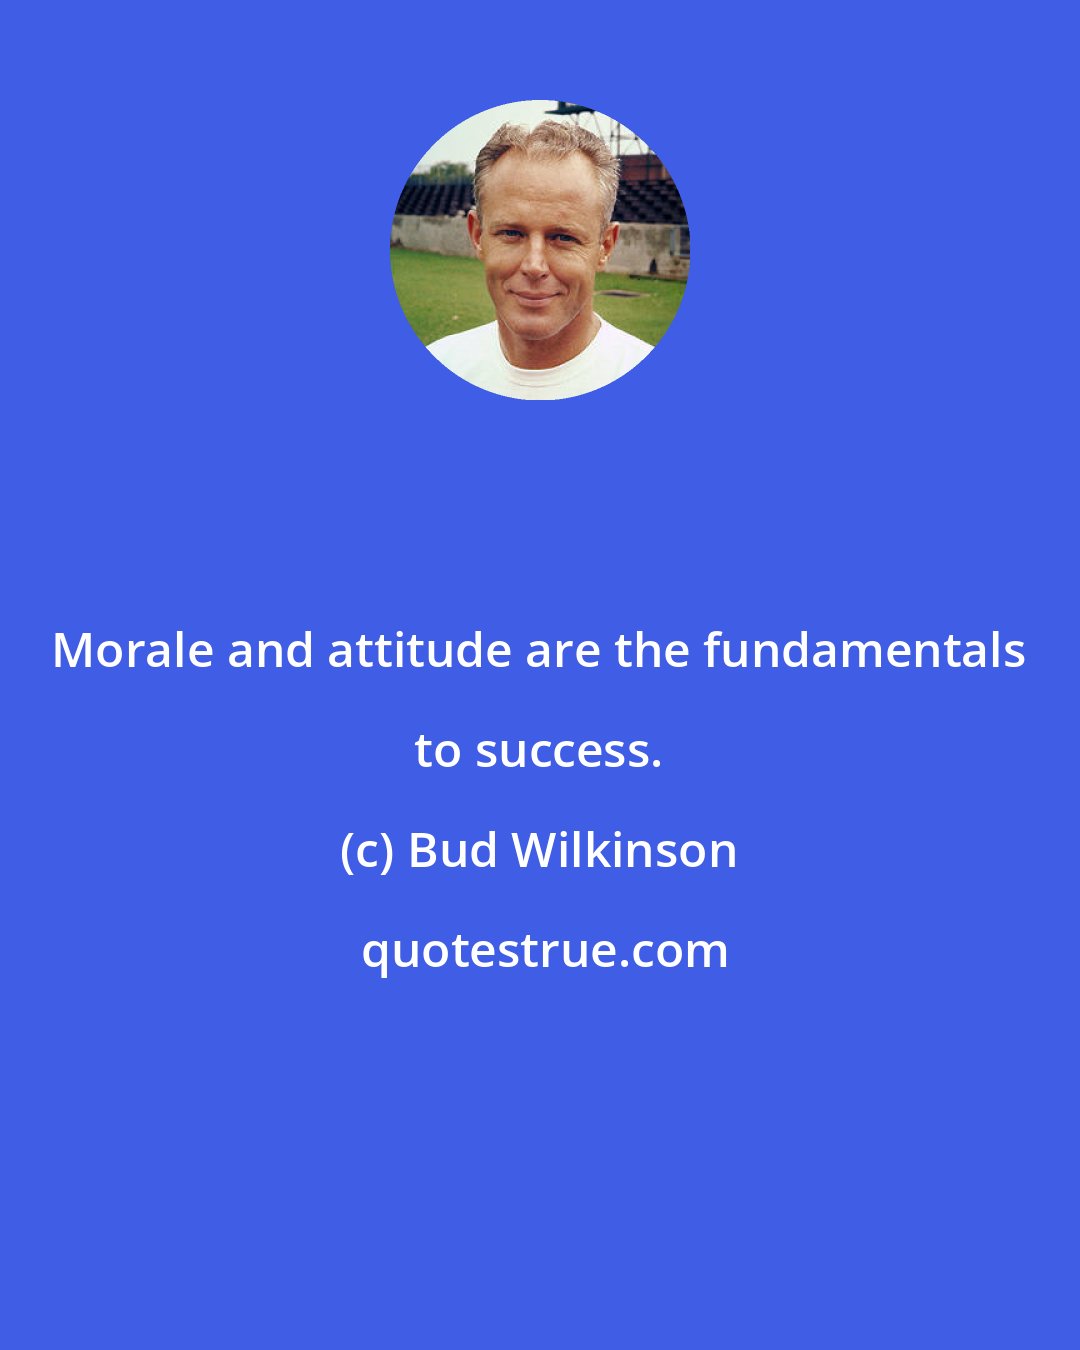 Bud Wilkinson: Morale and attitude are the fundamentals to success.